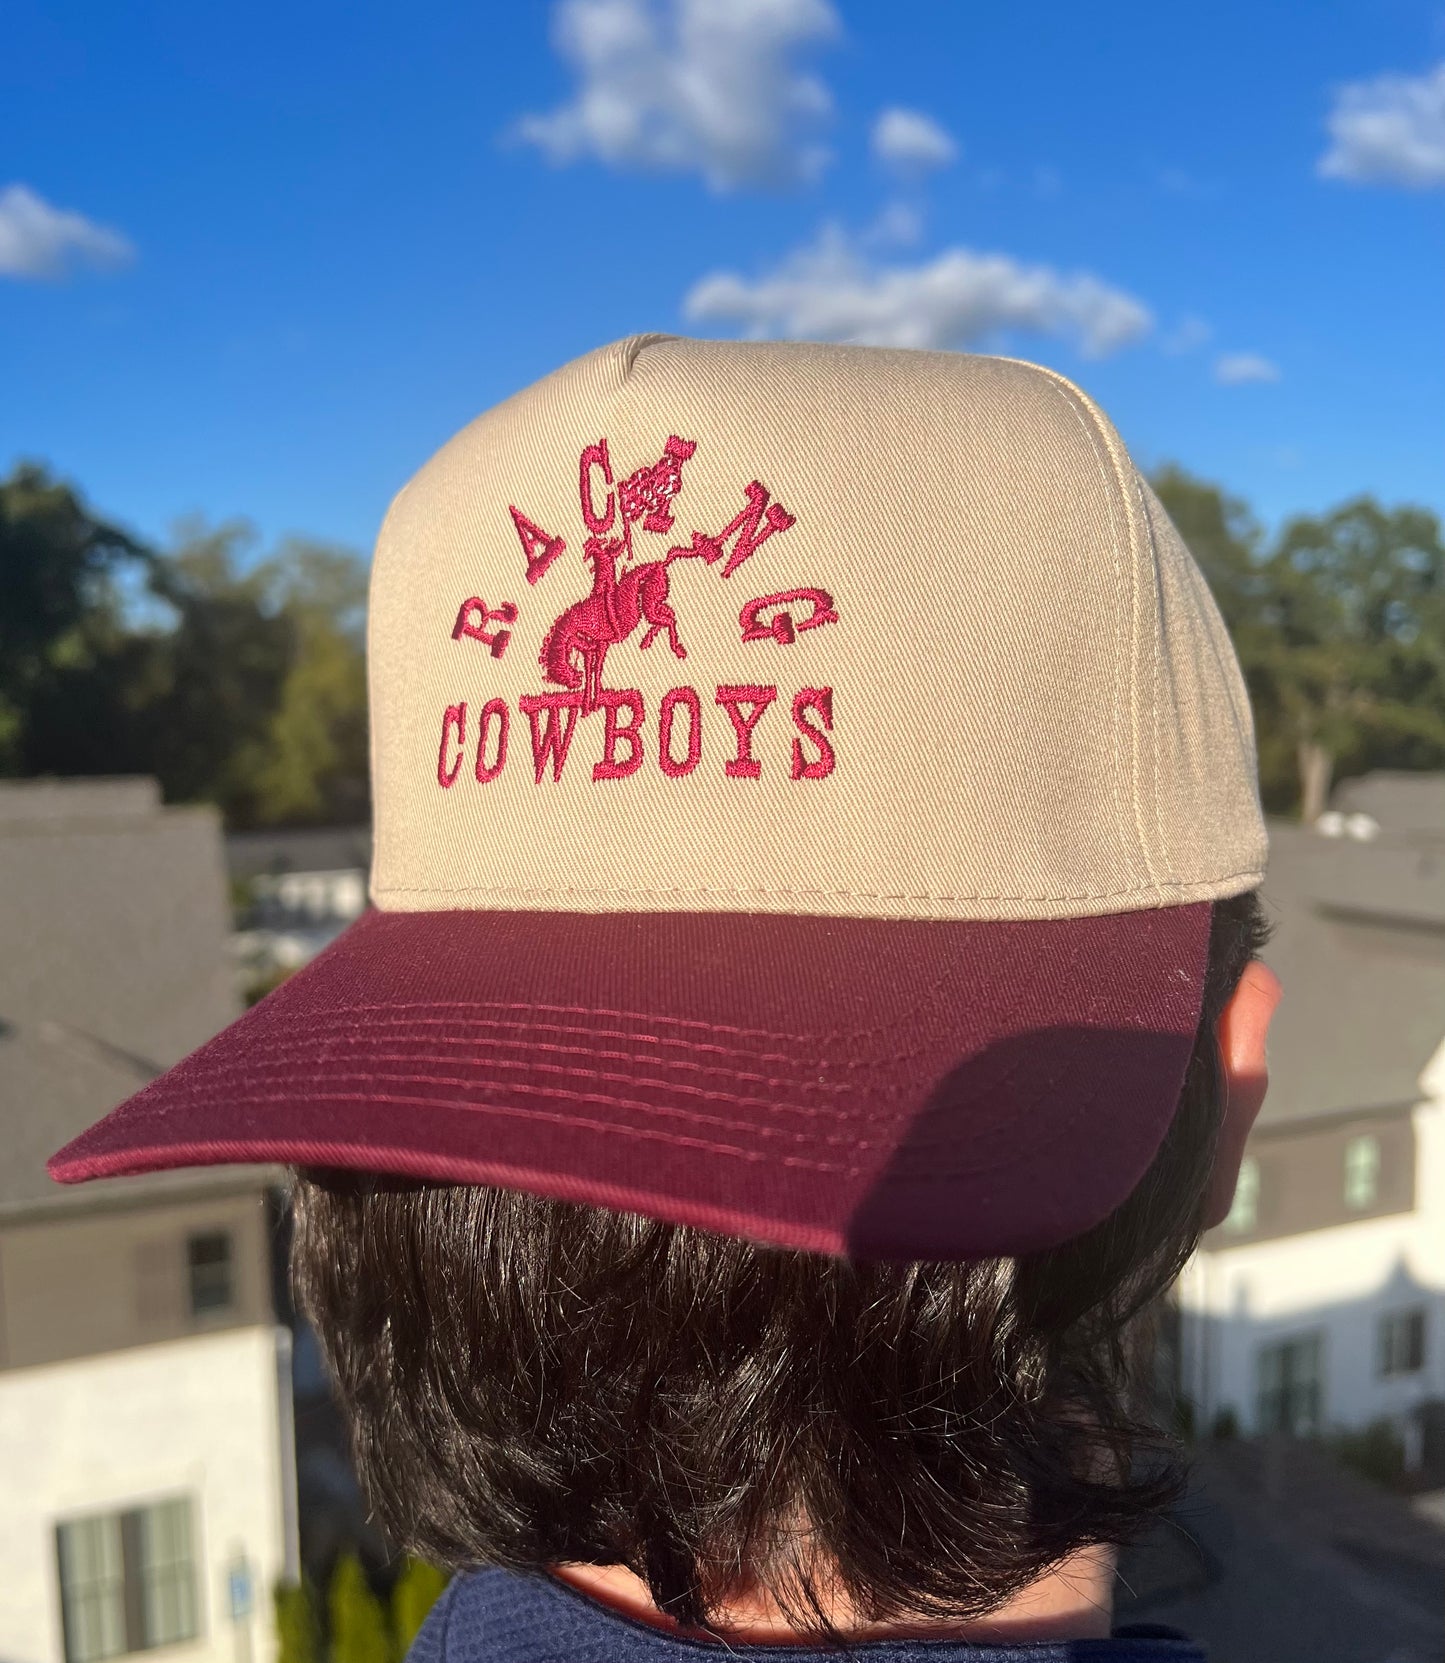 Racing Cowboys Hat- Khaki + Maroon